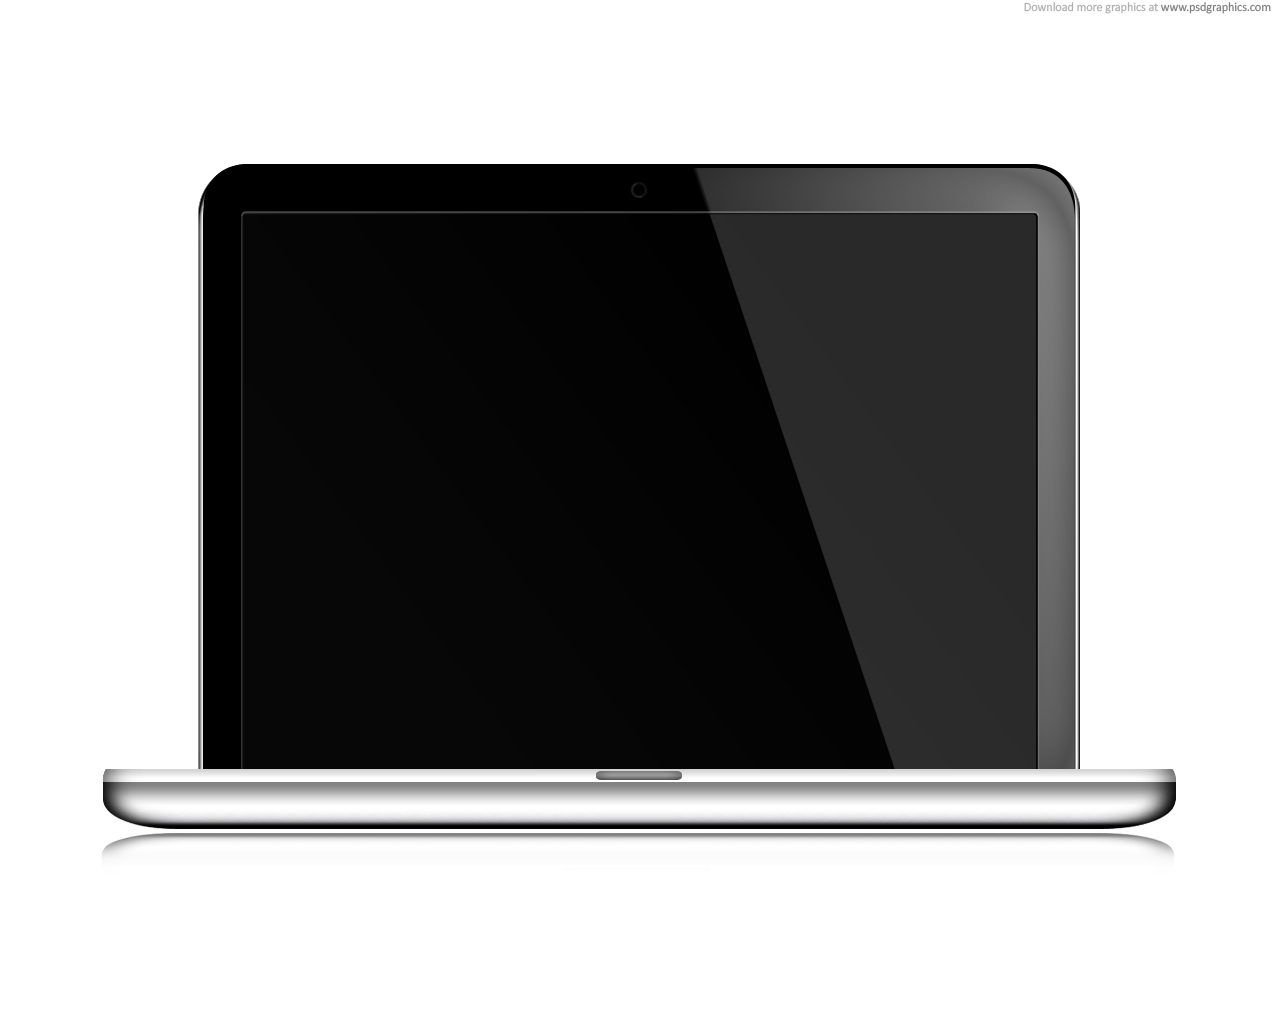 Desktop Computer Icon Black And White   Clipart Panda   Free Clipart